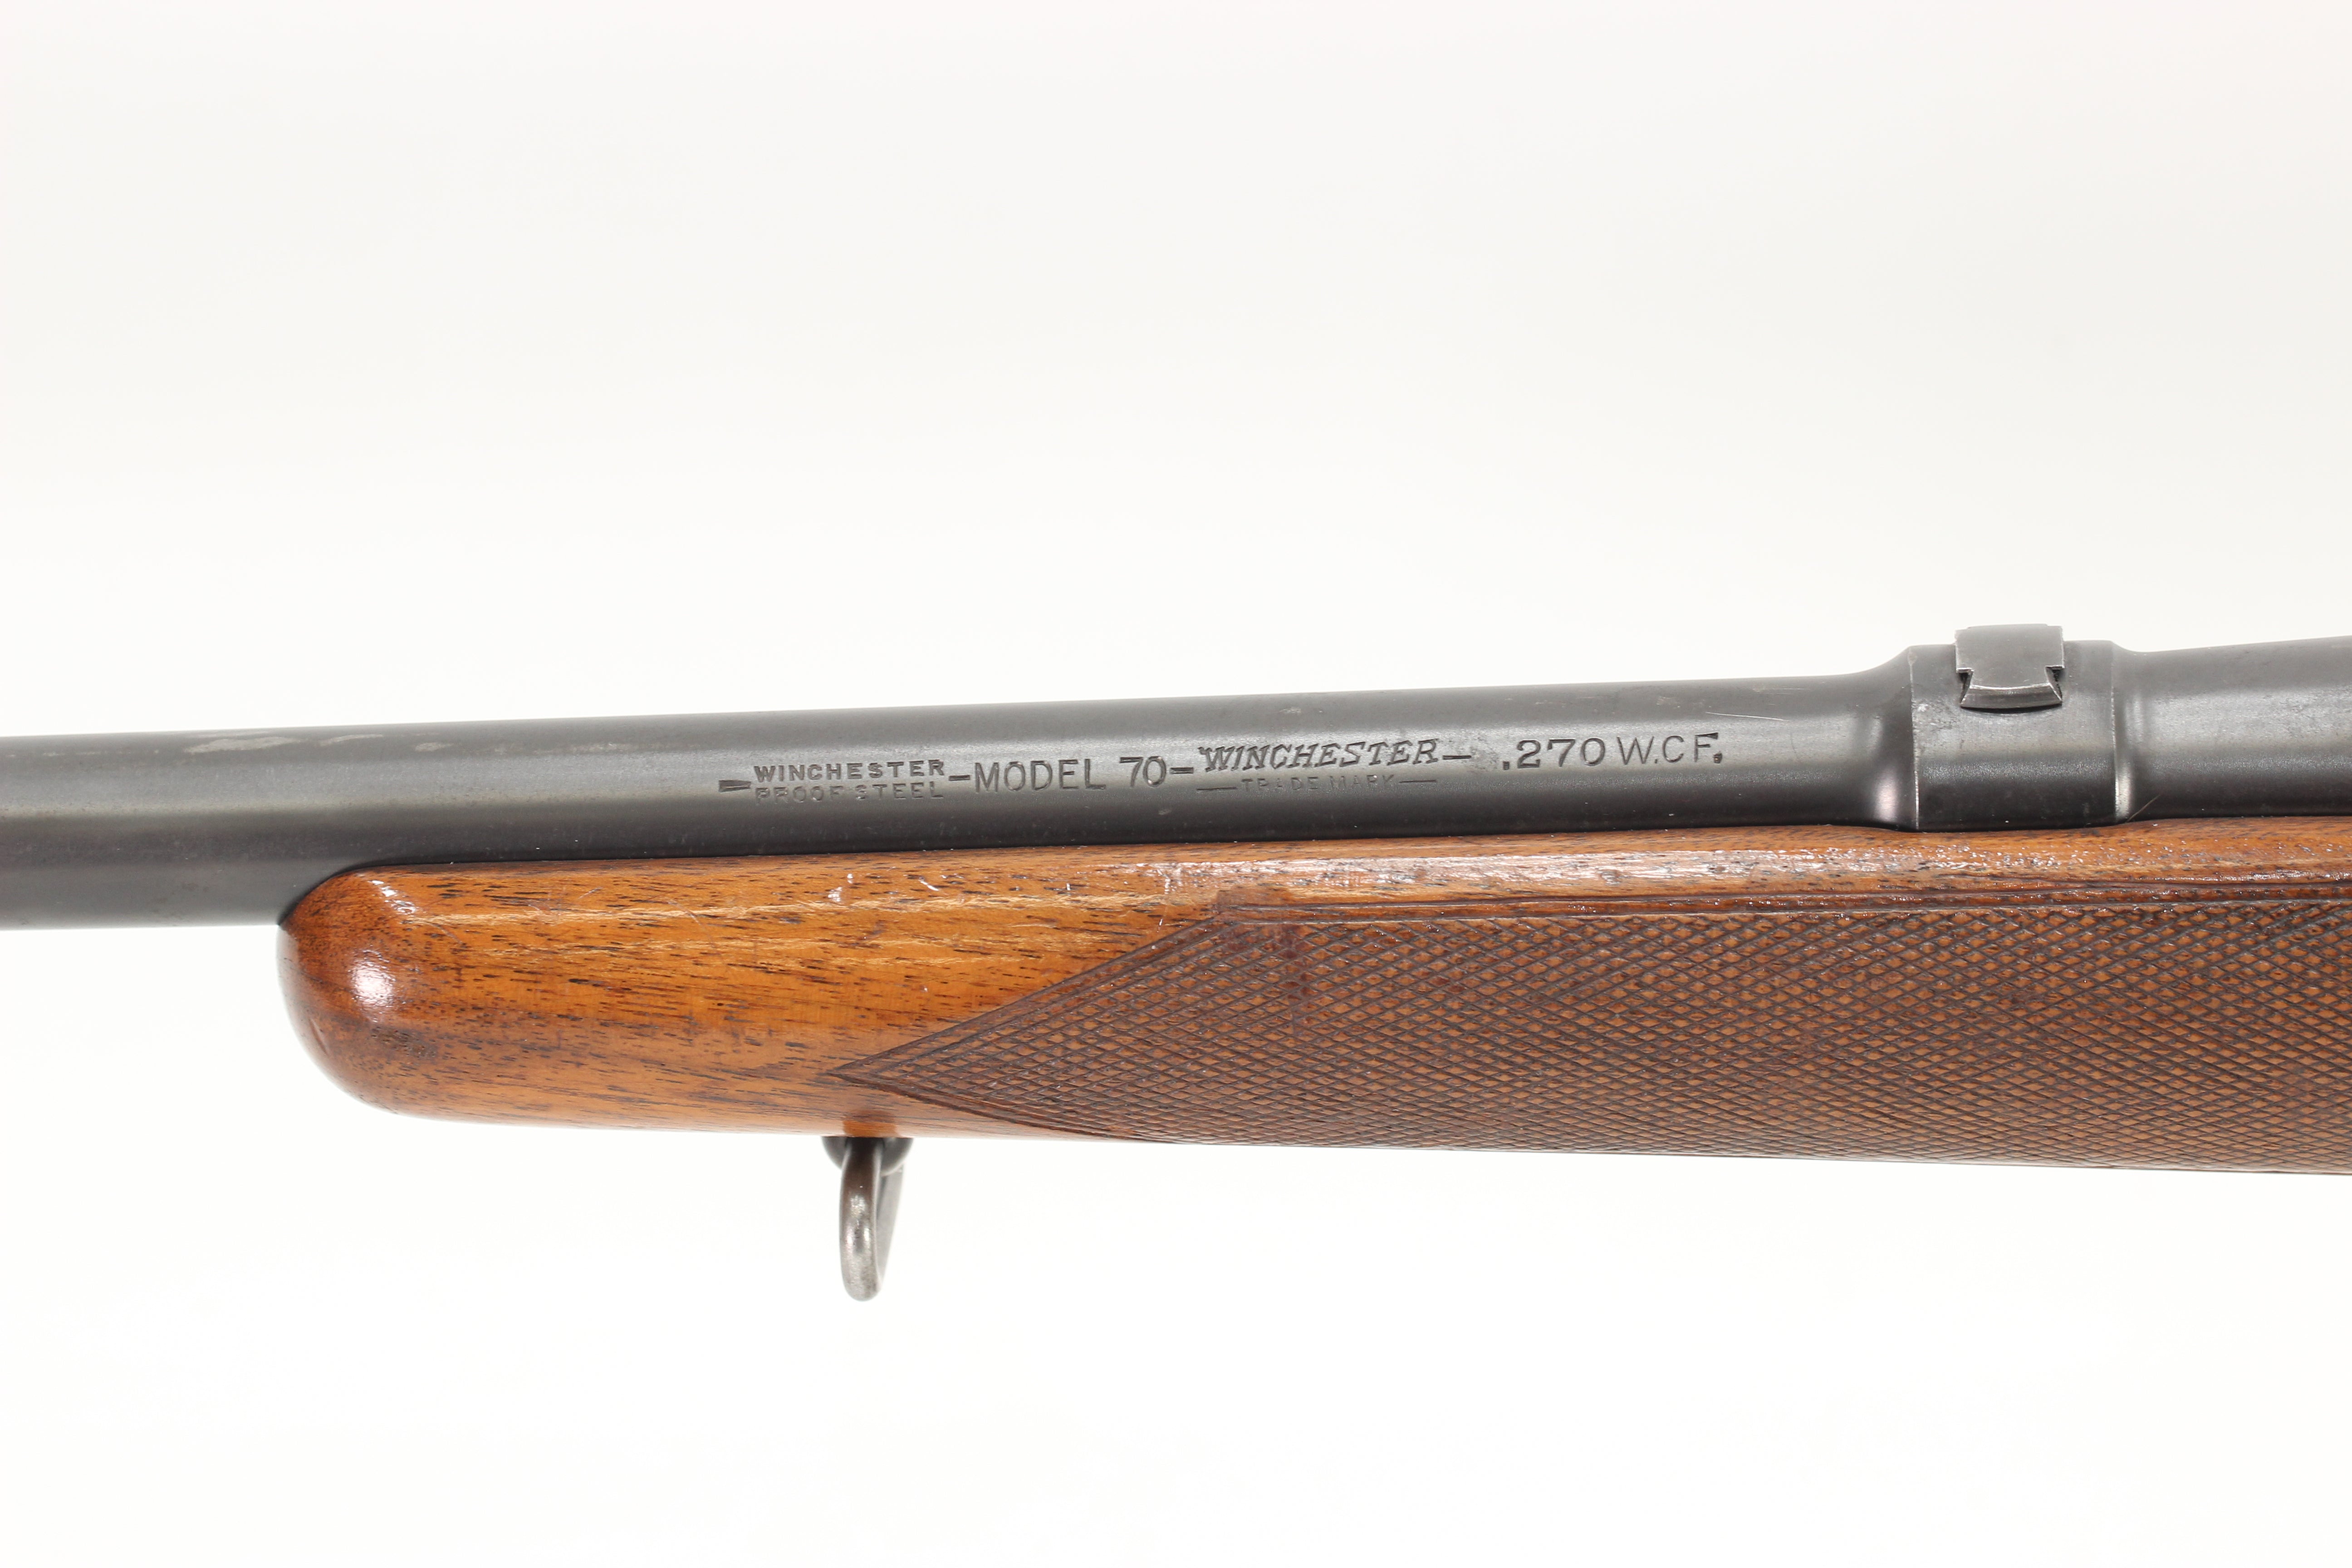 .270 W.F.C. Carbine - 1942